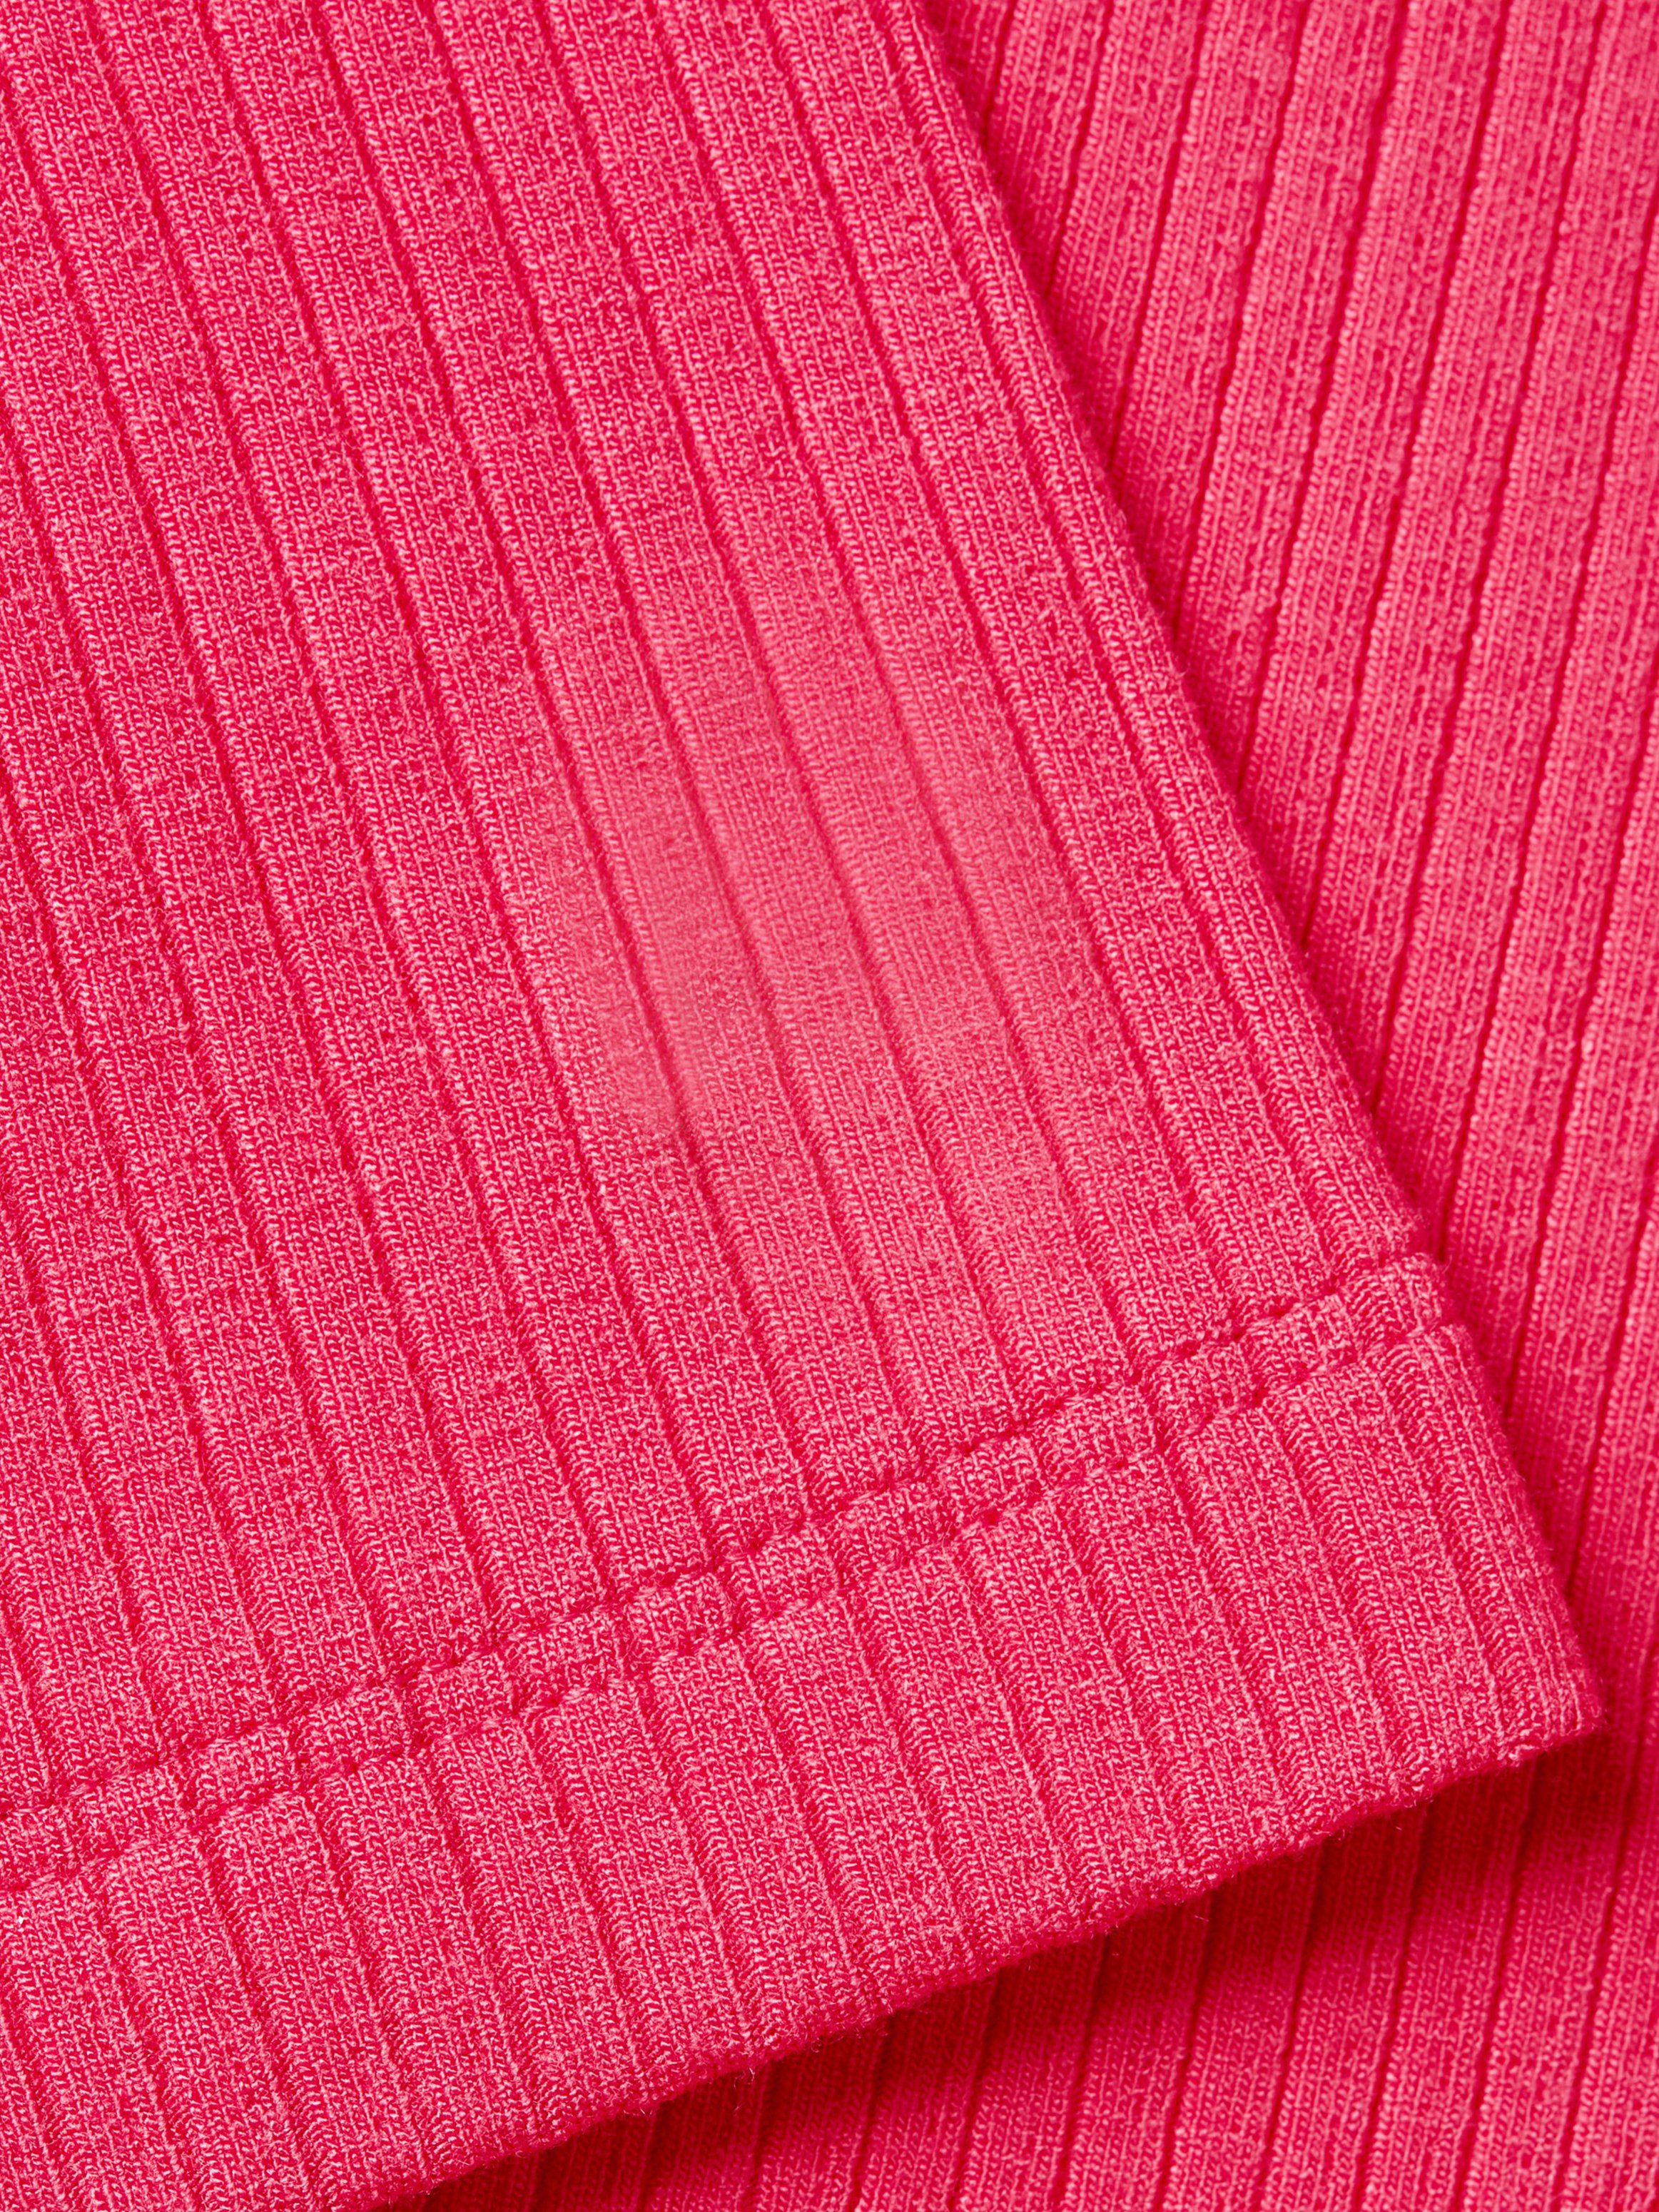 Bright_Cerise_Pink Langarmshirt Tommy modischer Hilfiger Rippware 5X2 in LS SLIM RIB O-NK